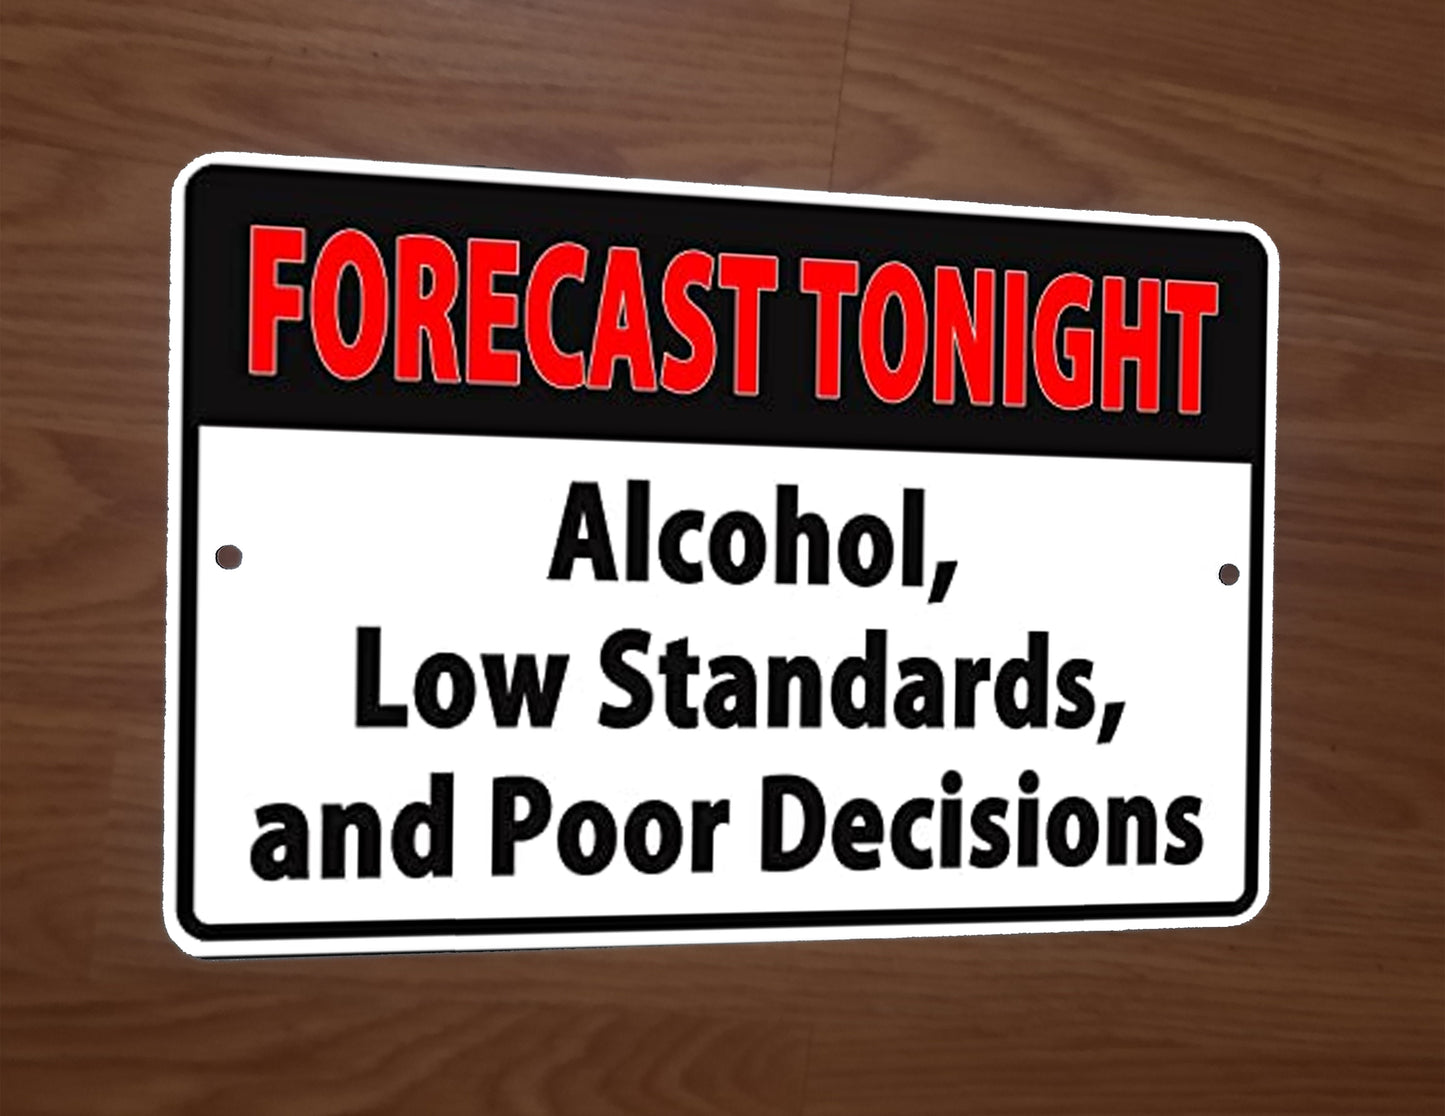 Forecast Tonight Alcohol Bad Decisions 8x12 Metal Wall garage Man Cave Bar Sign